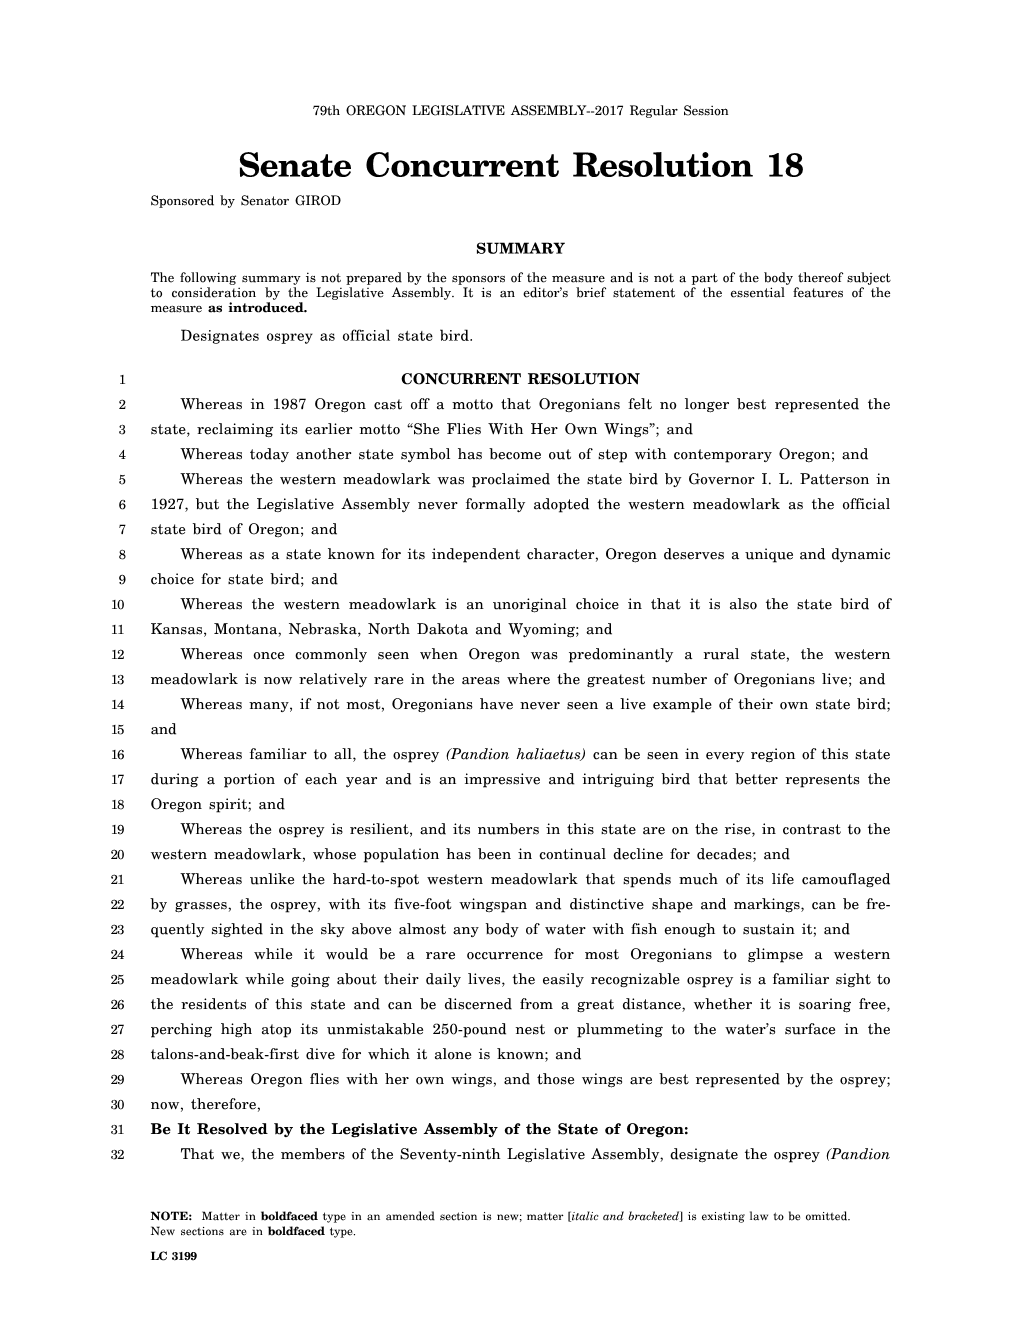 Senate Concurrent Resolution 18 Sponsored by Senator GIROD